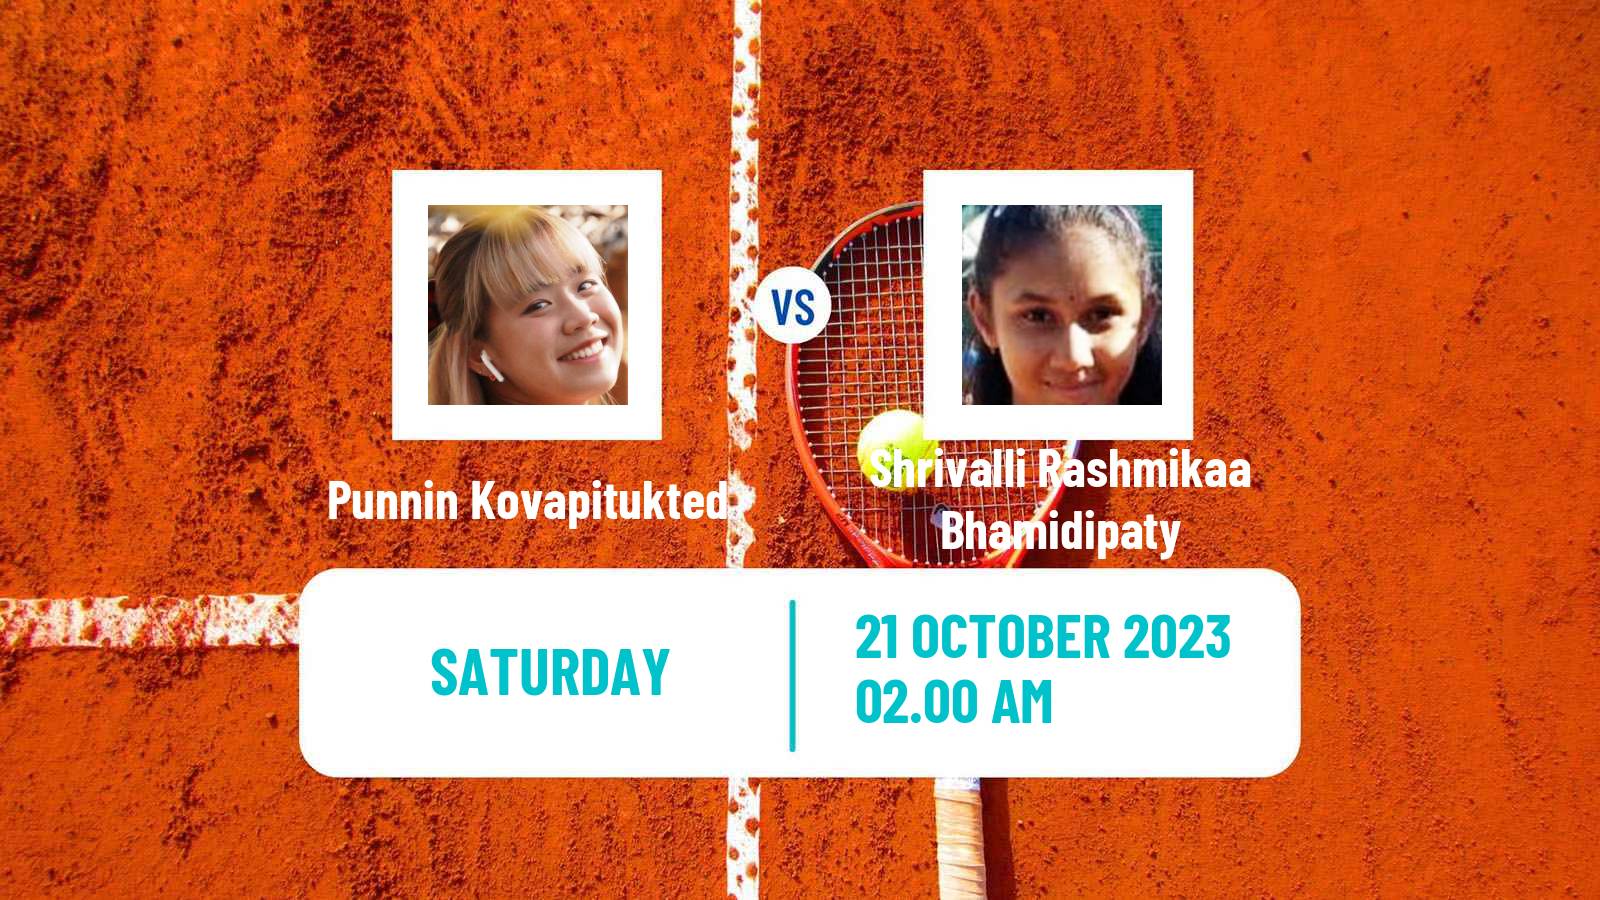 Tennis ITF W15 Hua Hin 2 Women Punnin Kovapitukted - Shrivalli Rashmikaa Bhamidipaty